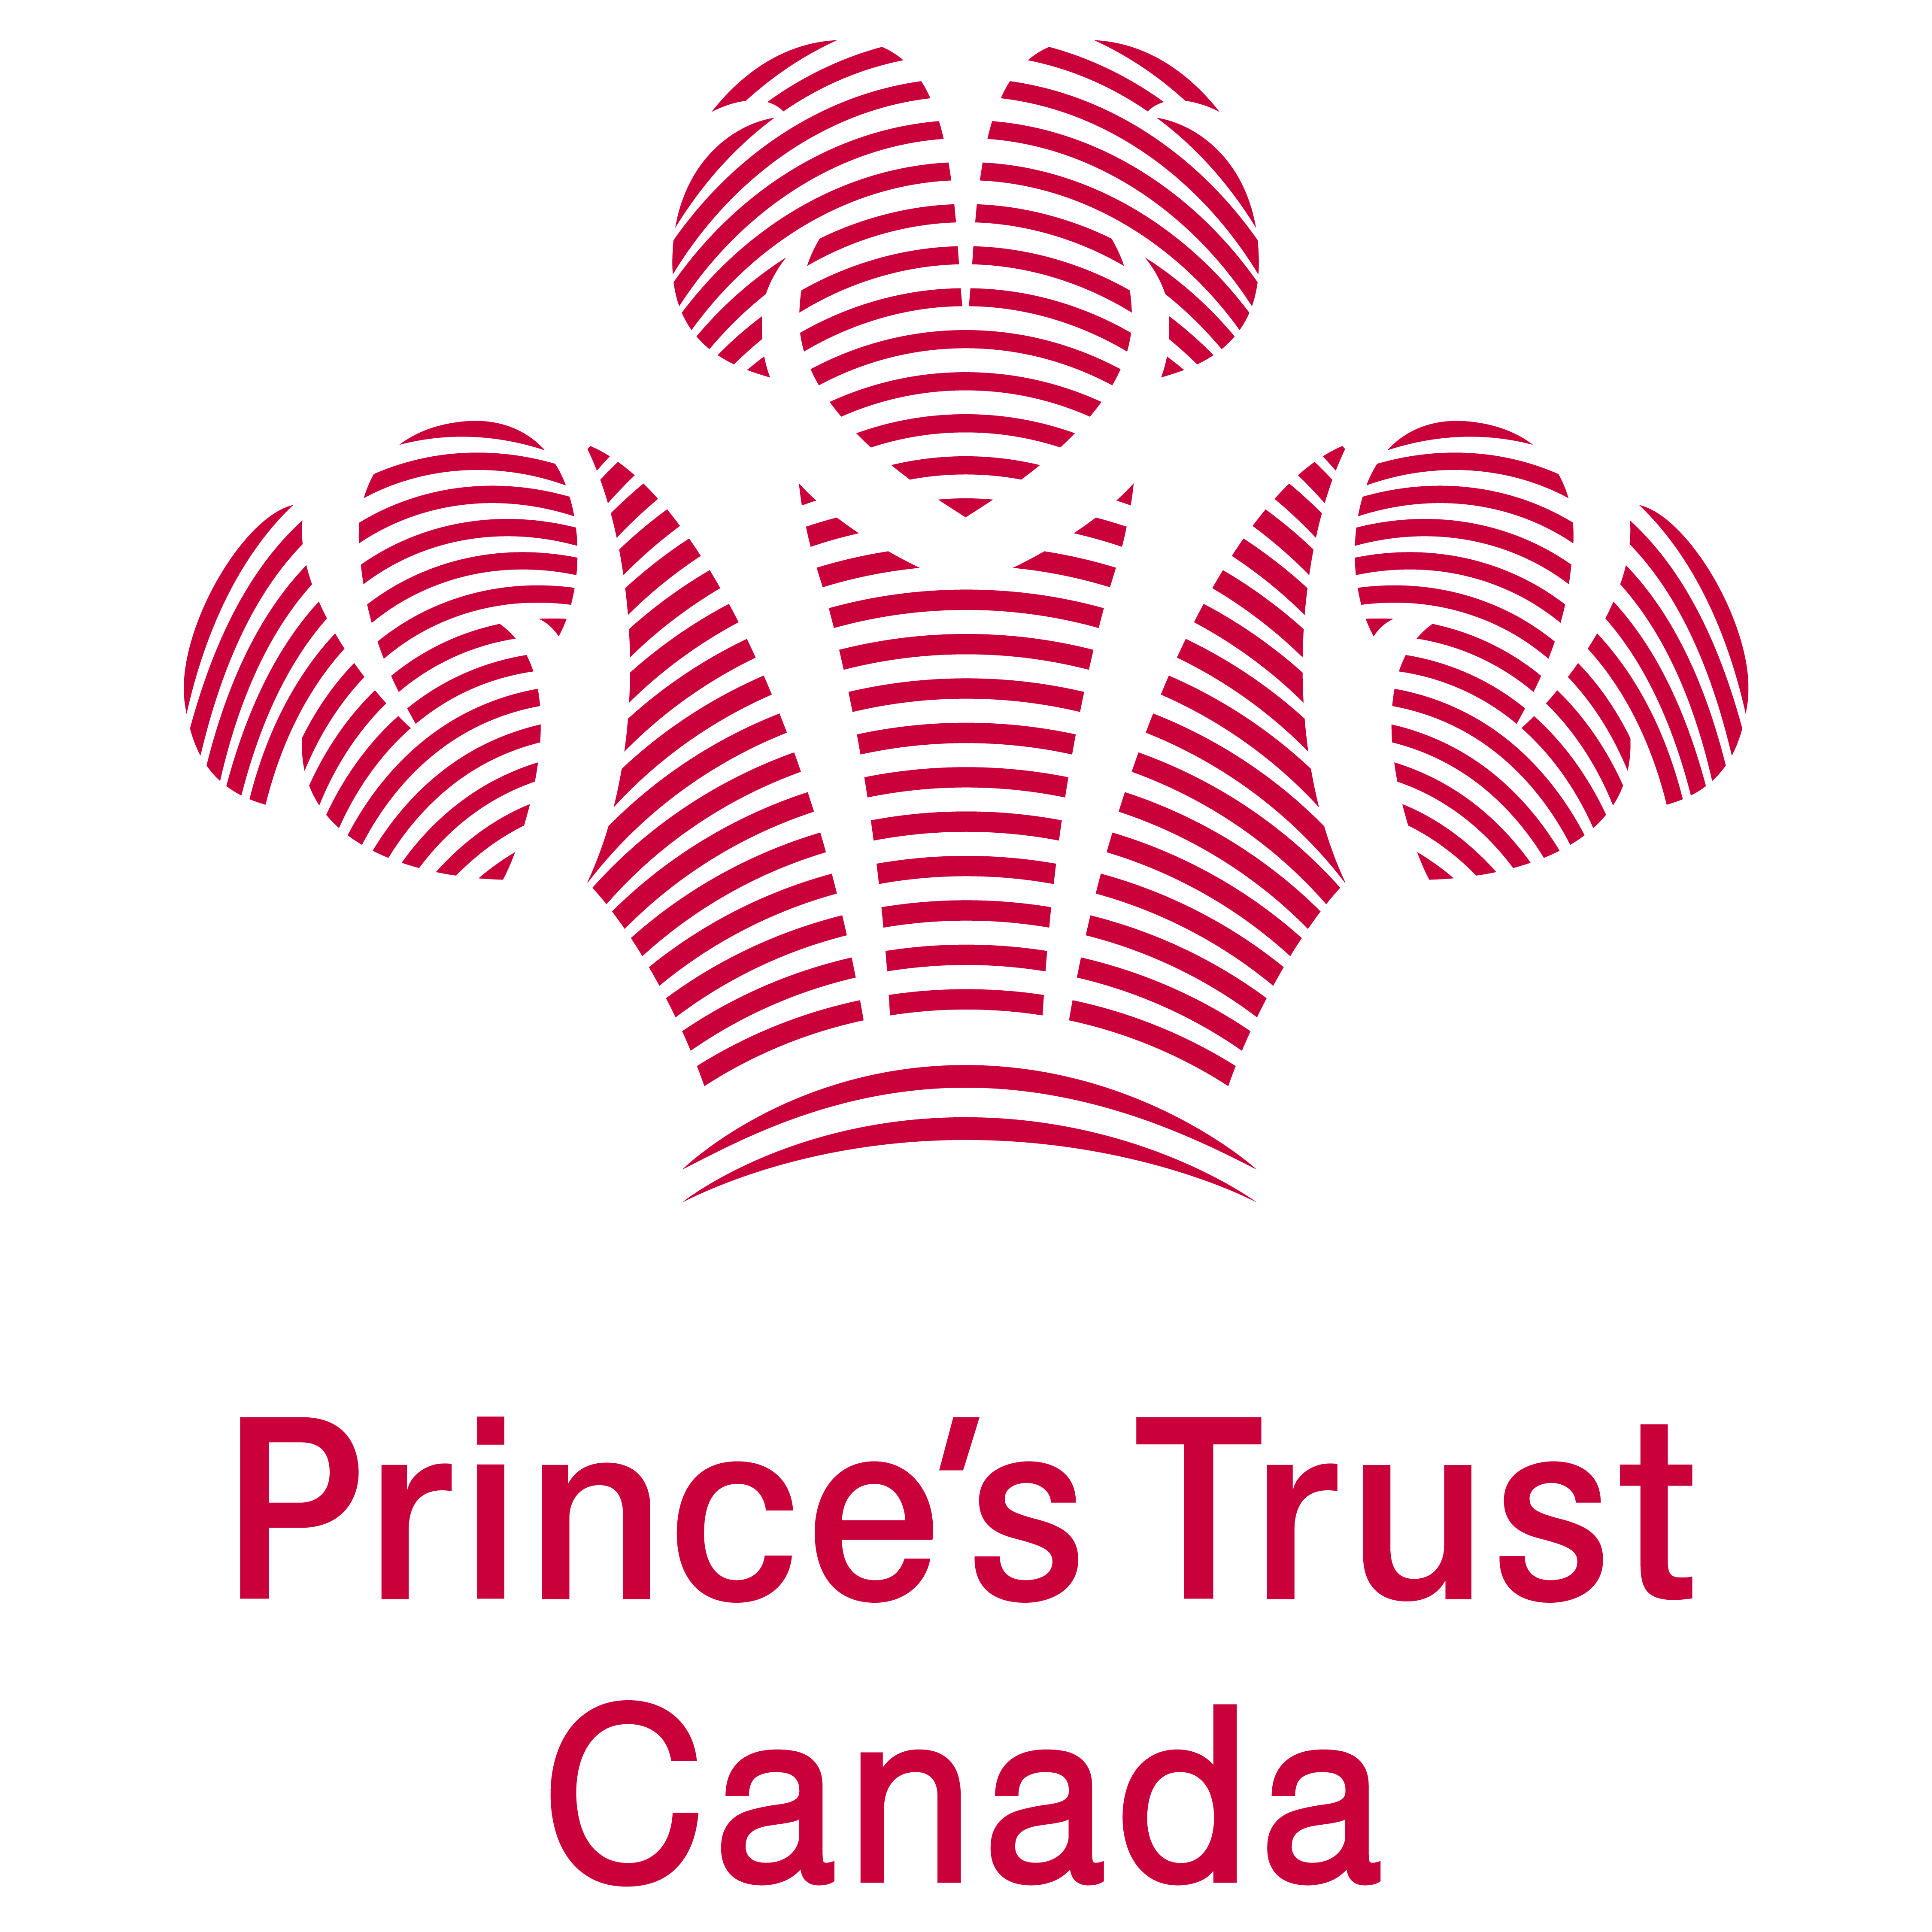 Prince's Trust Canada